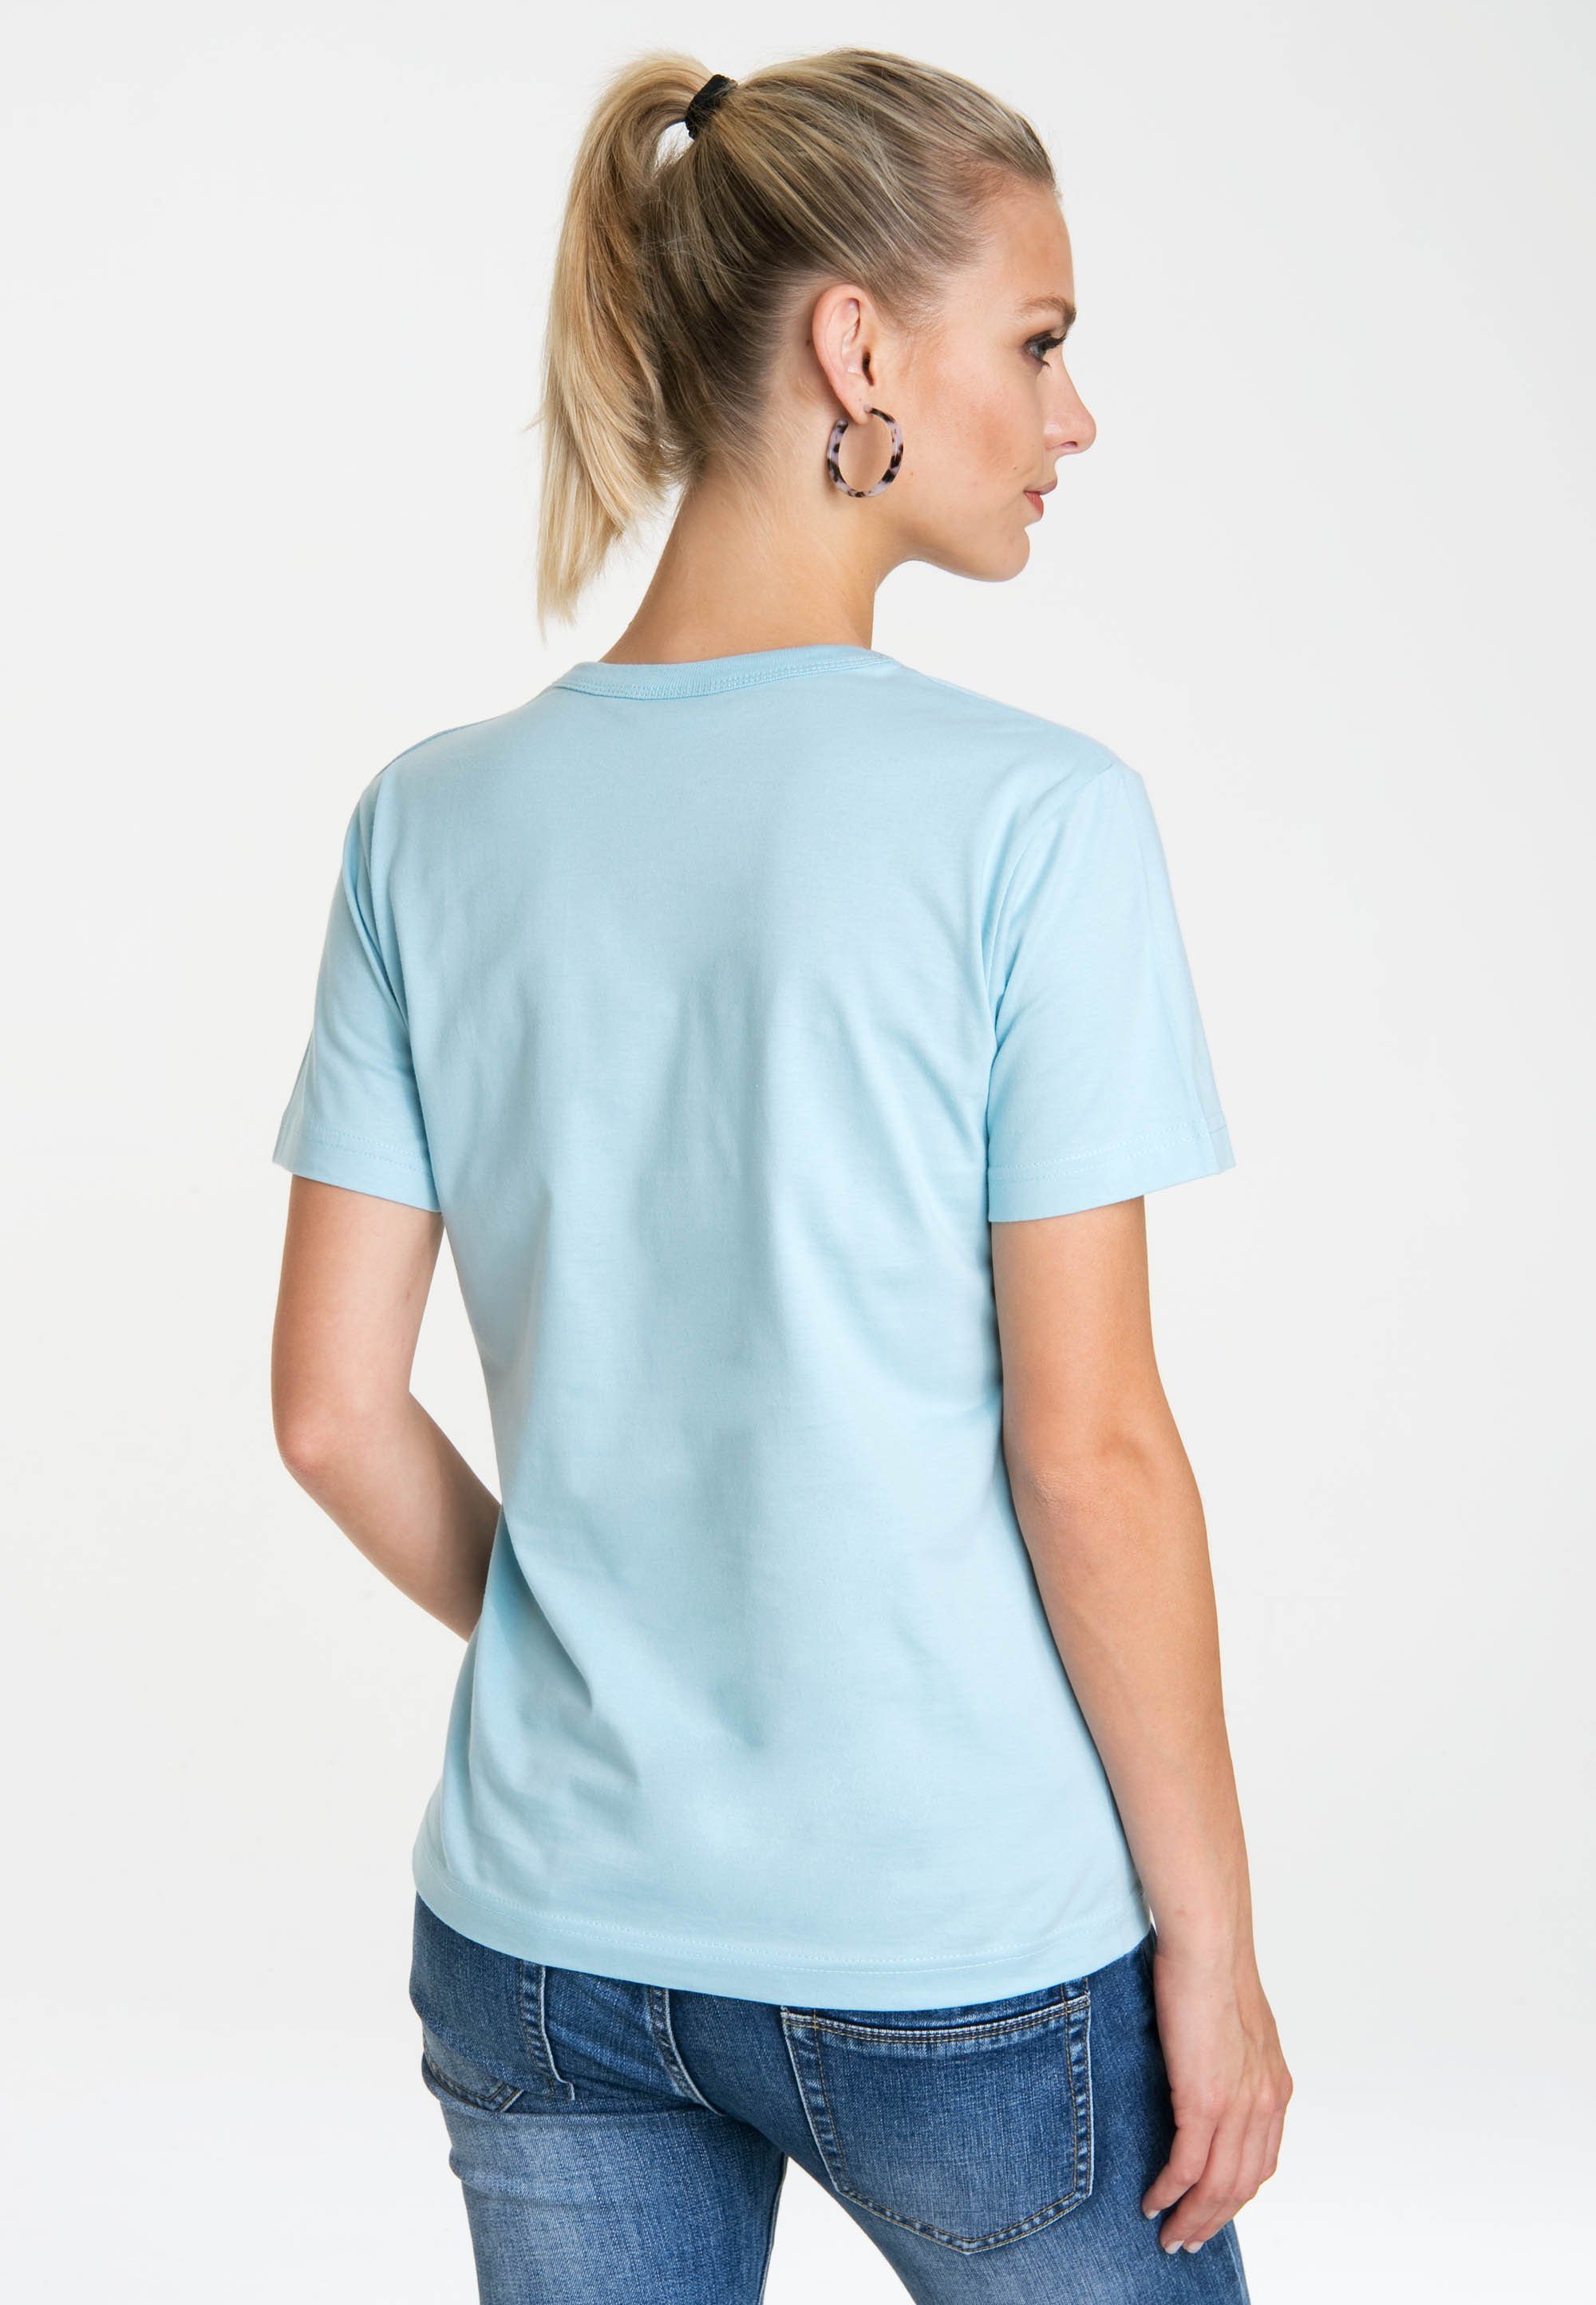 LOGOSHIRT T-Shirt Sesamstrasse Krümelmonster hellblau Originalddesign mit - lizenziertem